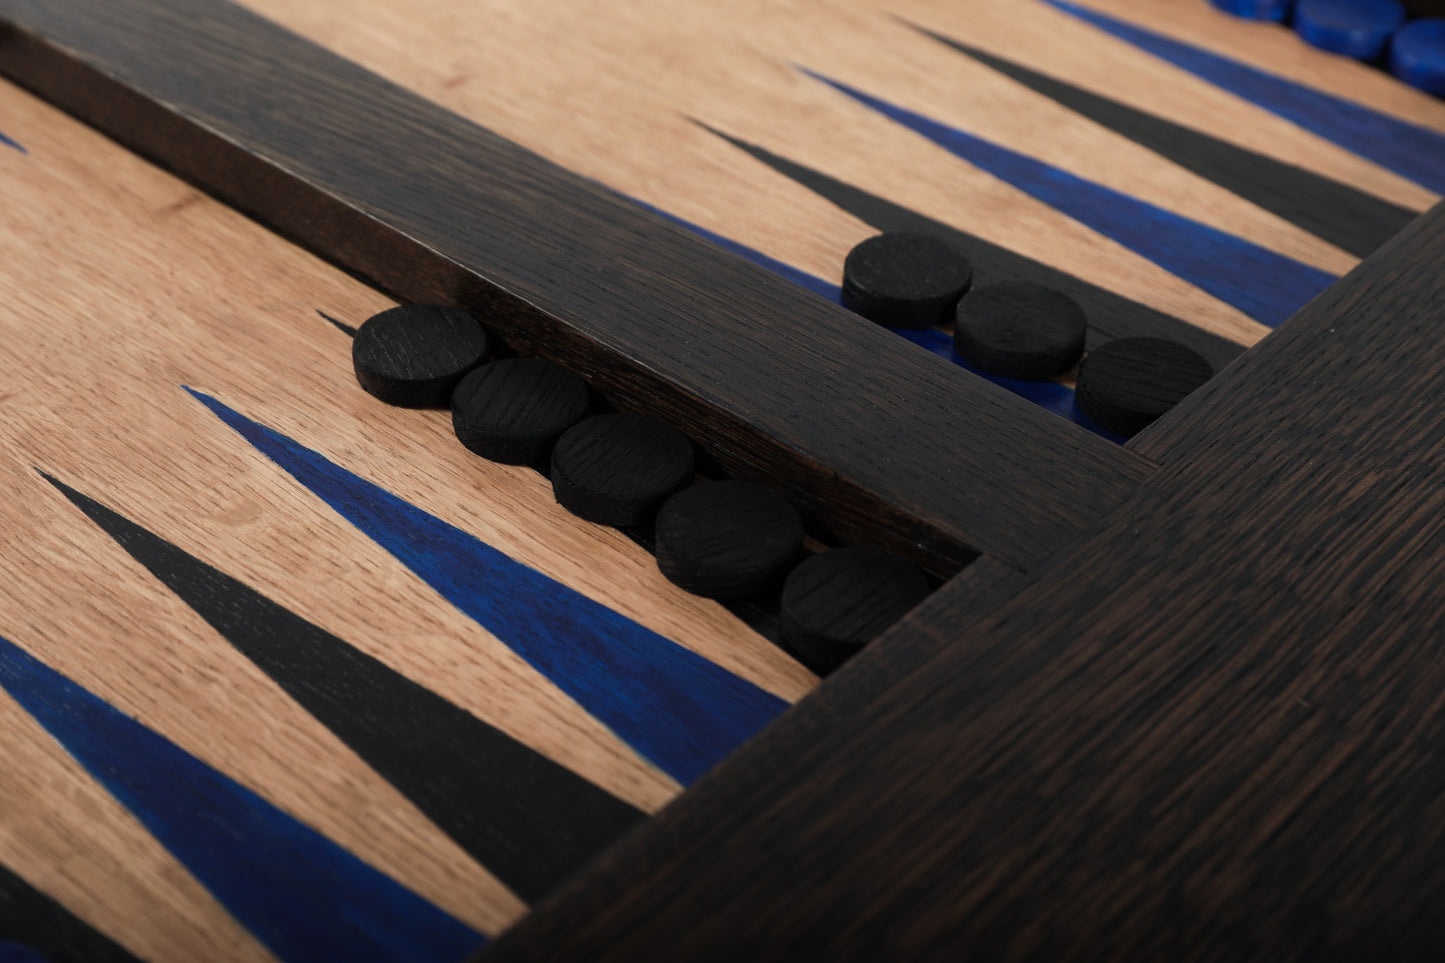 Backgammon table